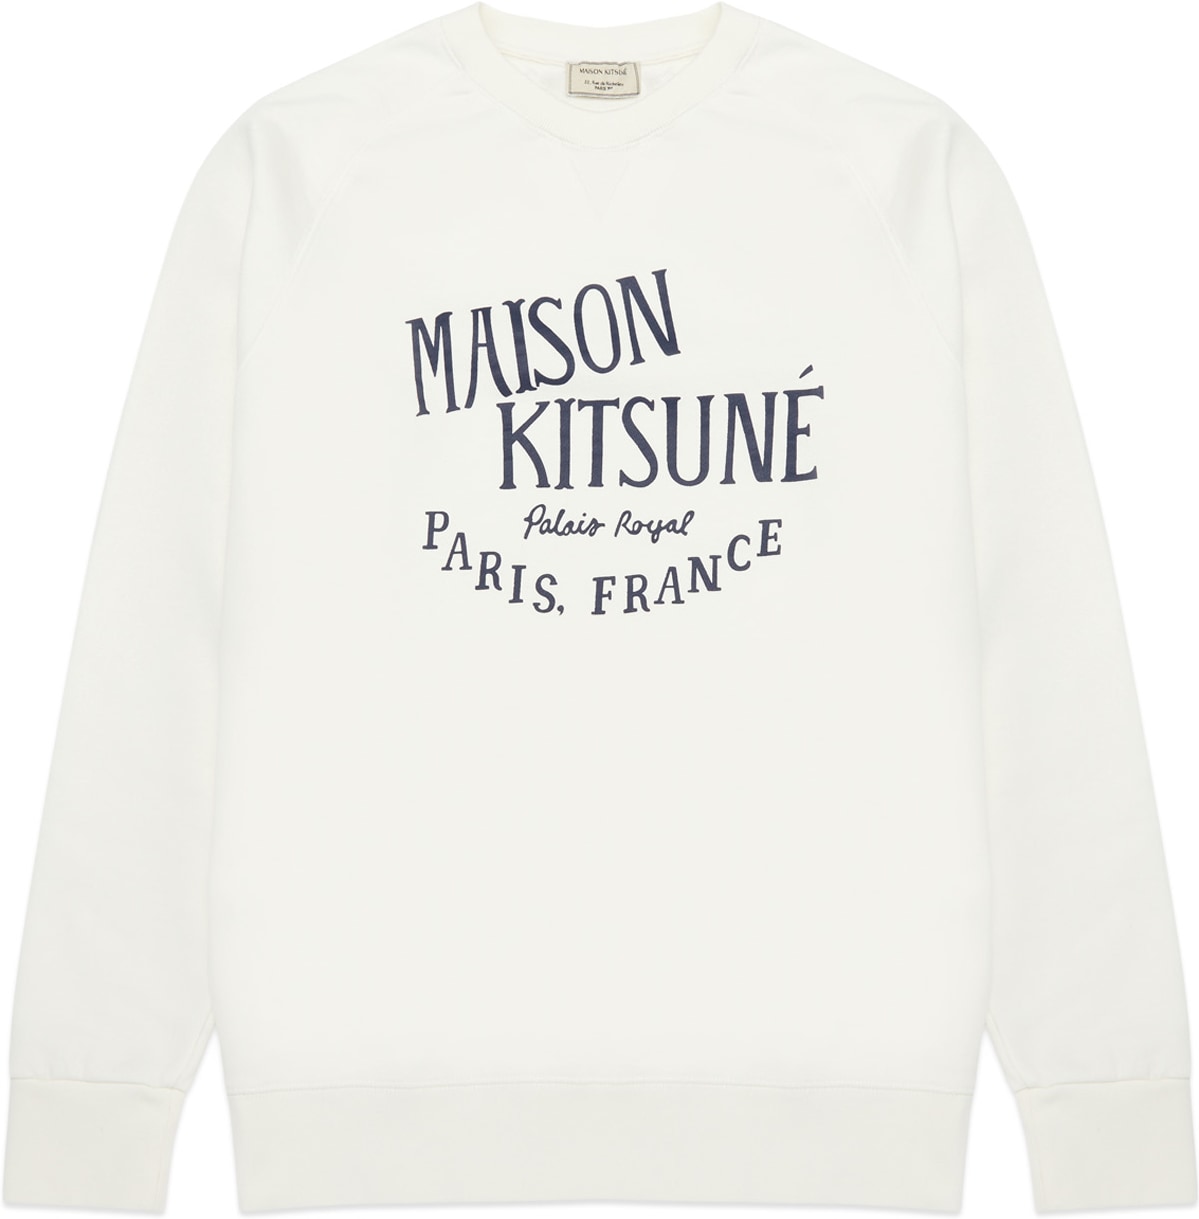 Maison Kitsuné: Palais Royal Classic Pullover Sweater | influenceu